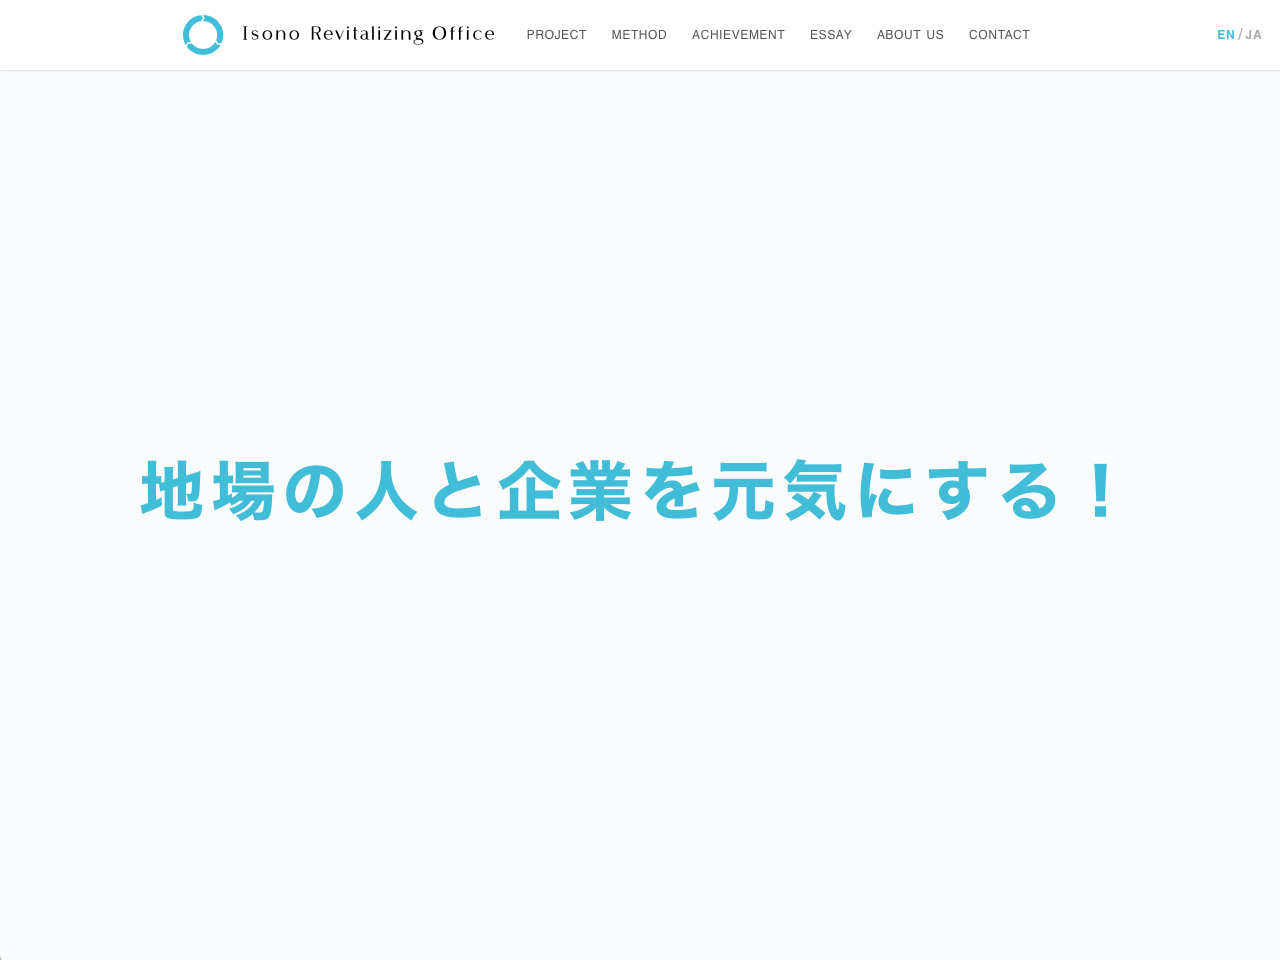 Isono Revitalizing Office website